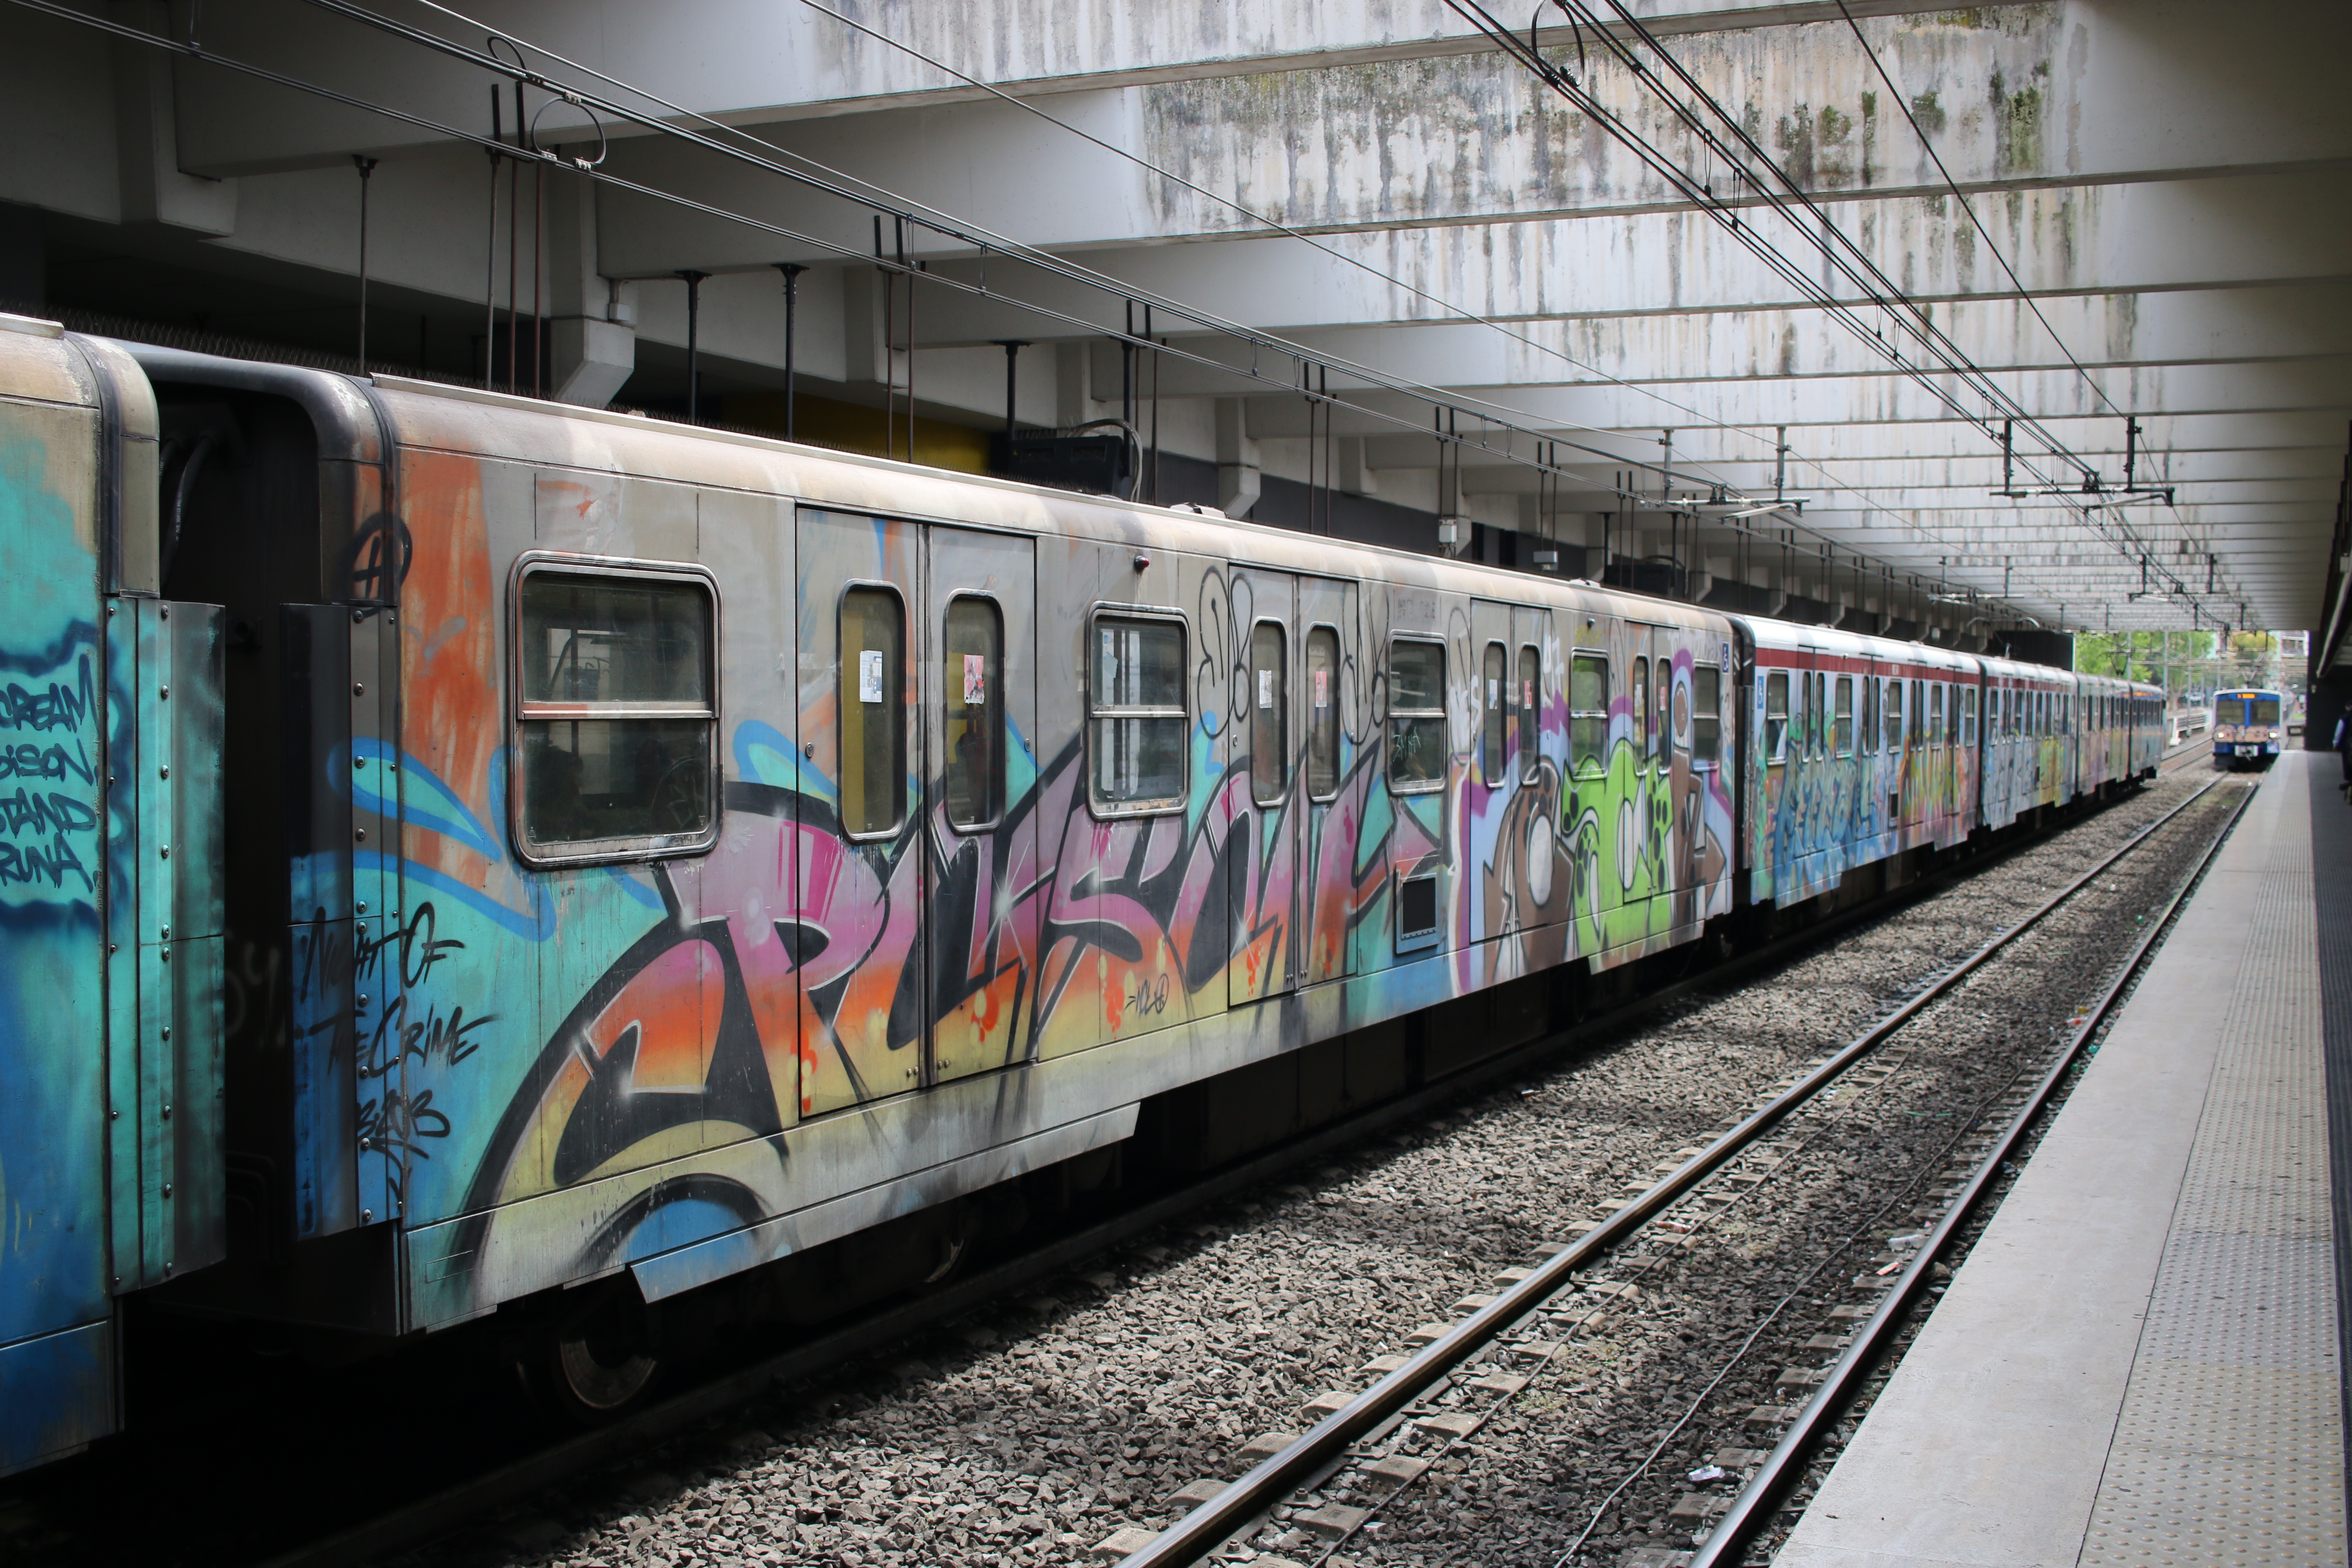 File:Metro train in Rome.jpg - Wikimedia Commons